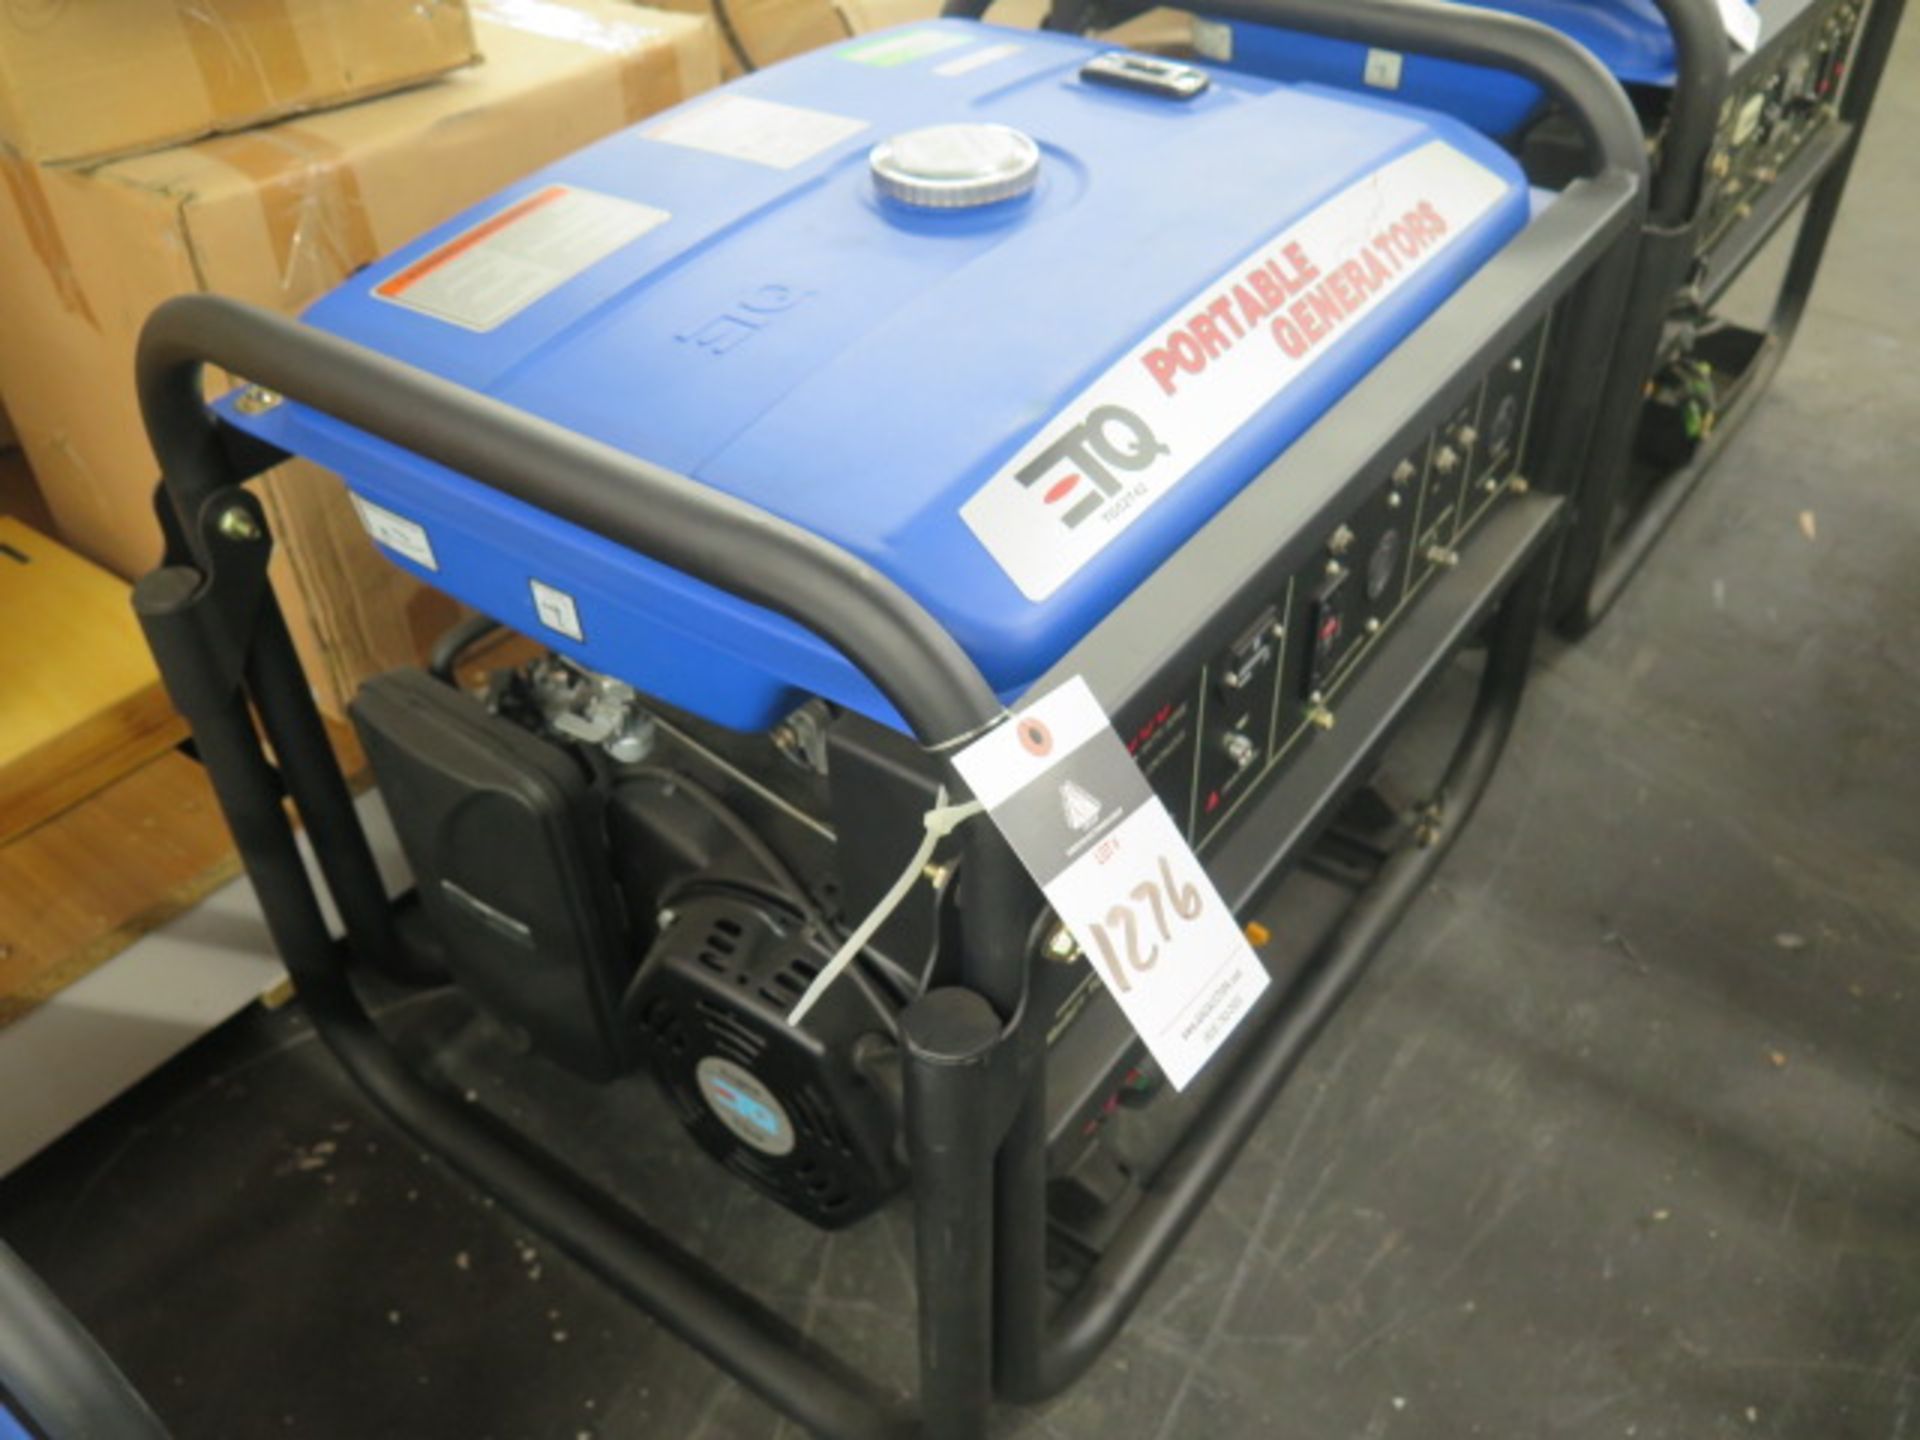 ETQ TG52T42 6000 Watt Gas Powered Generator - Image 2 of 5